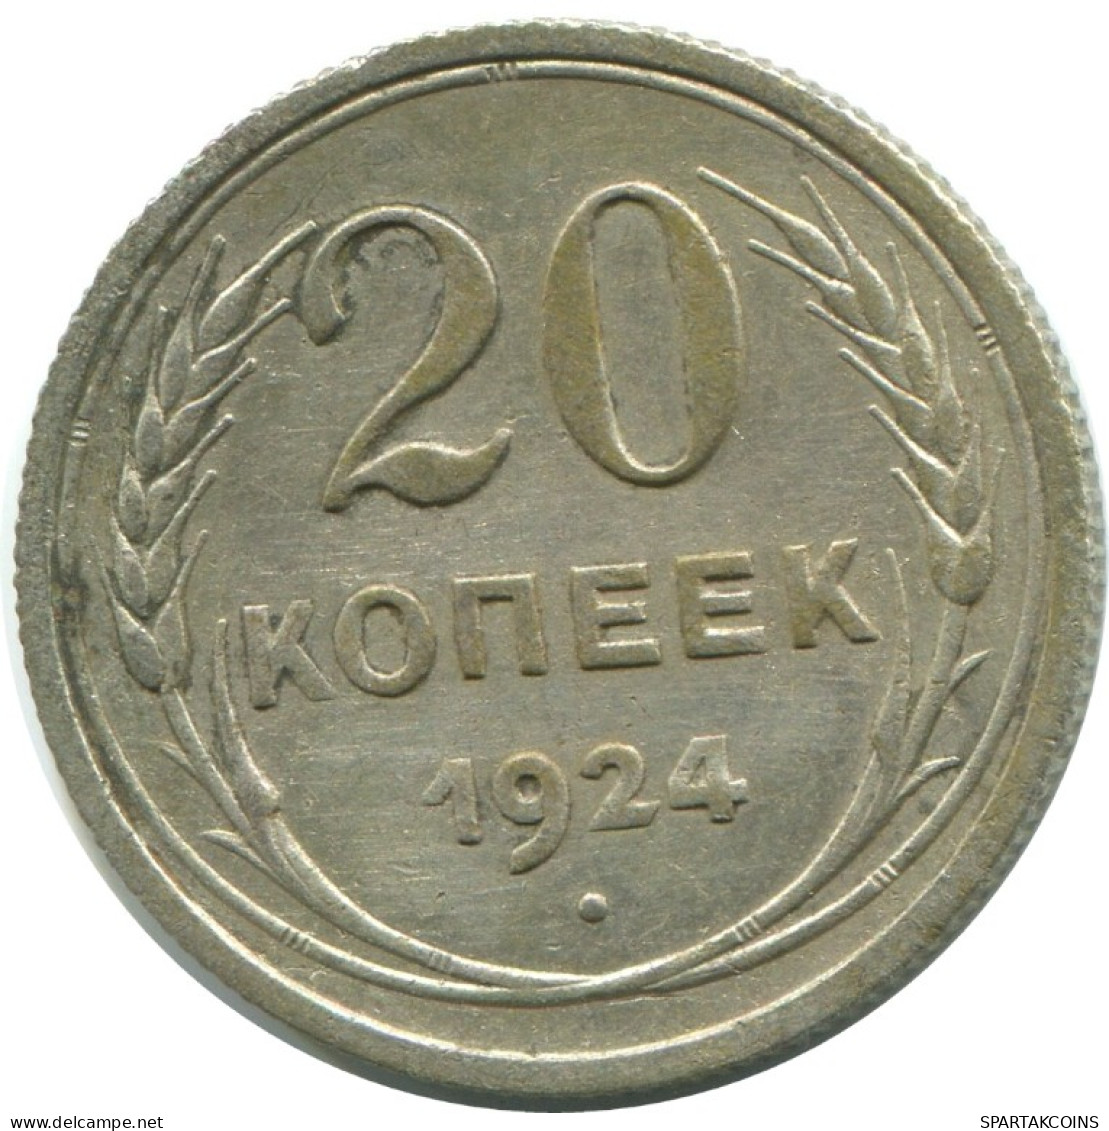 20 KOPEKS 1924 RUSSIA USSR SILVER Coin HIGH GRADE #AF285.4.U.A - Russie